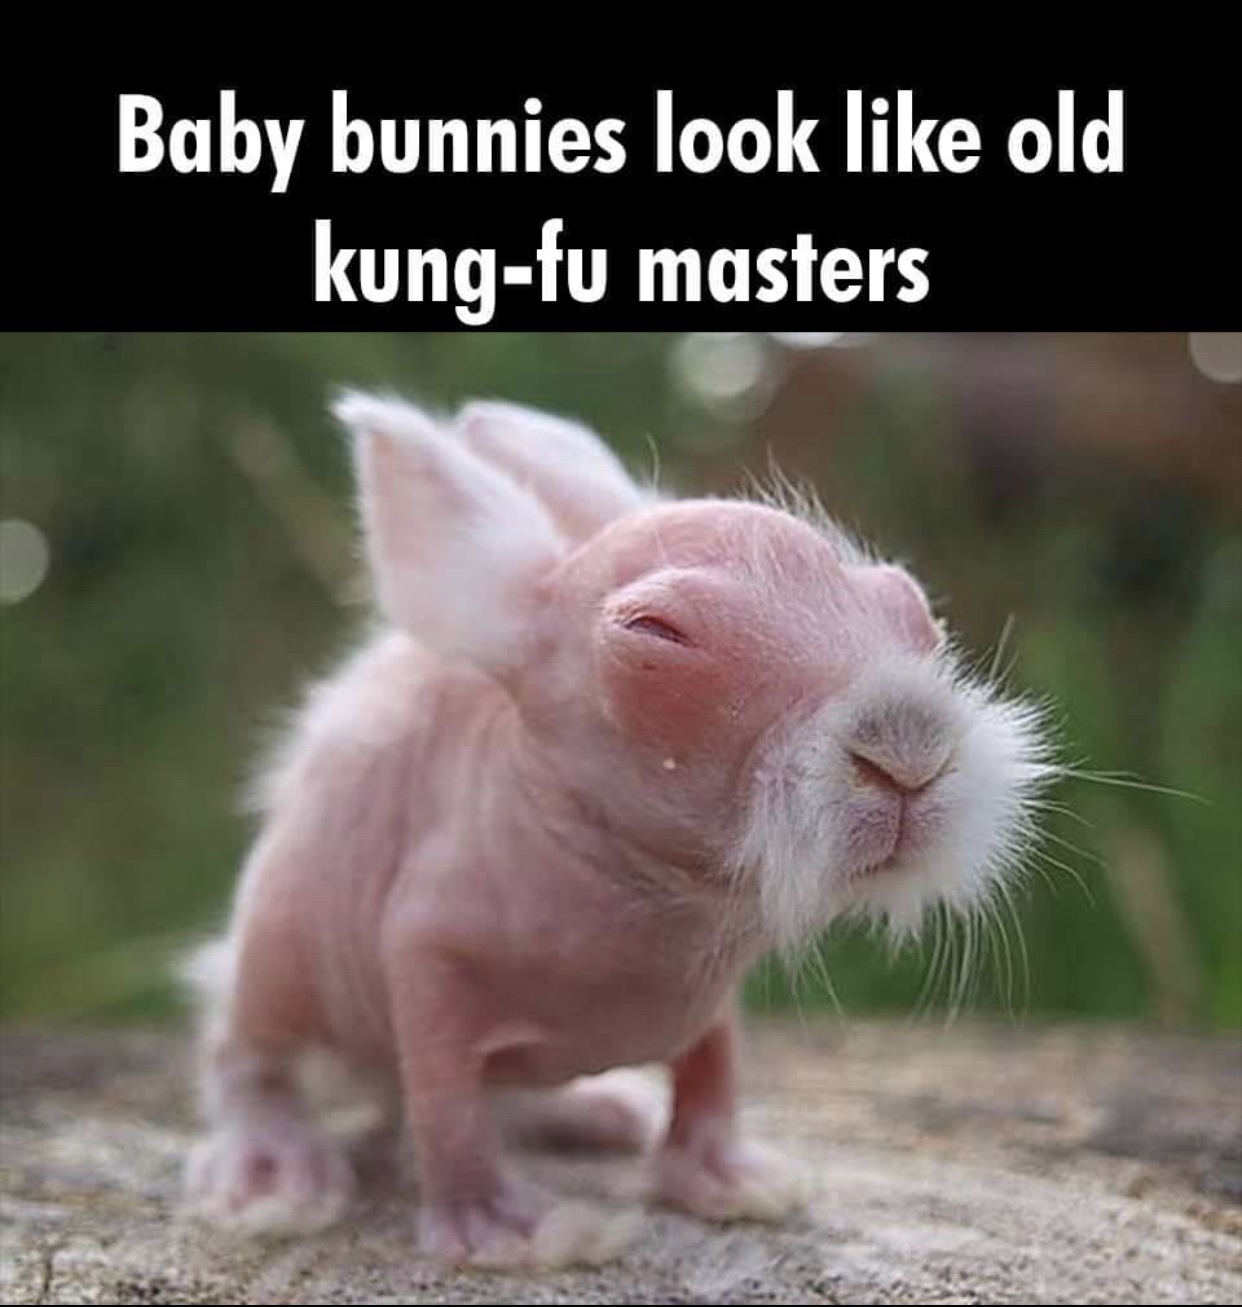 Baby bunnies look old kungfu masters